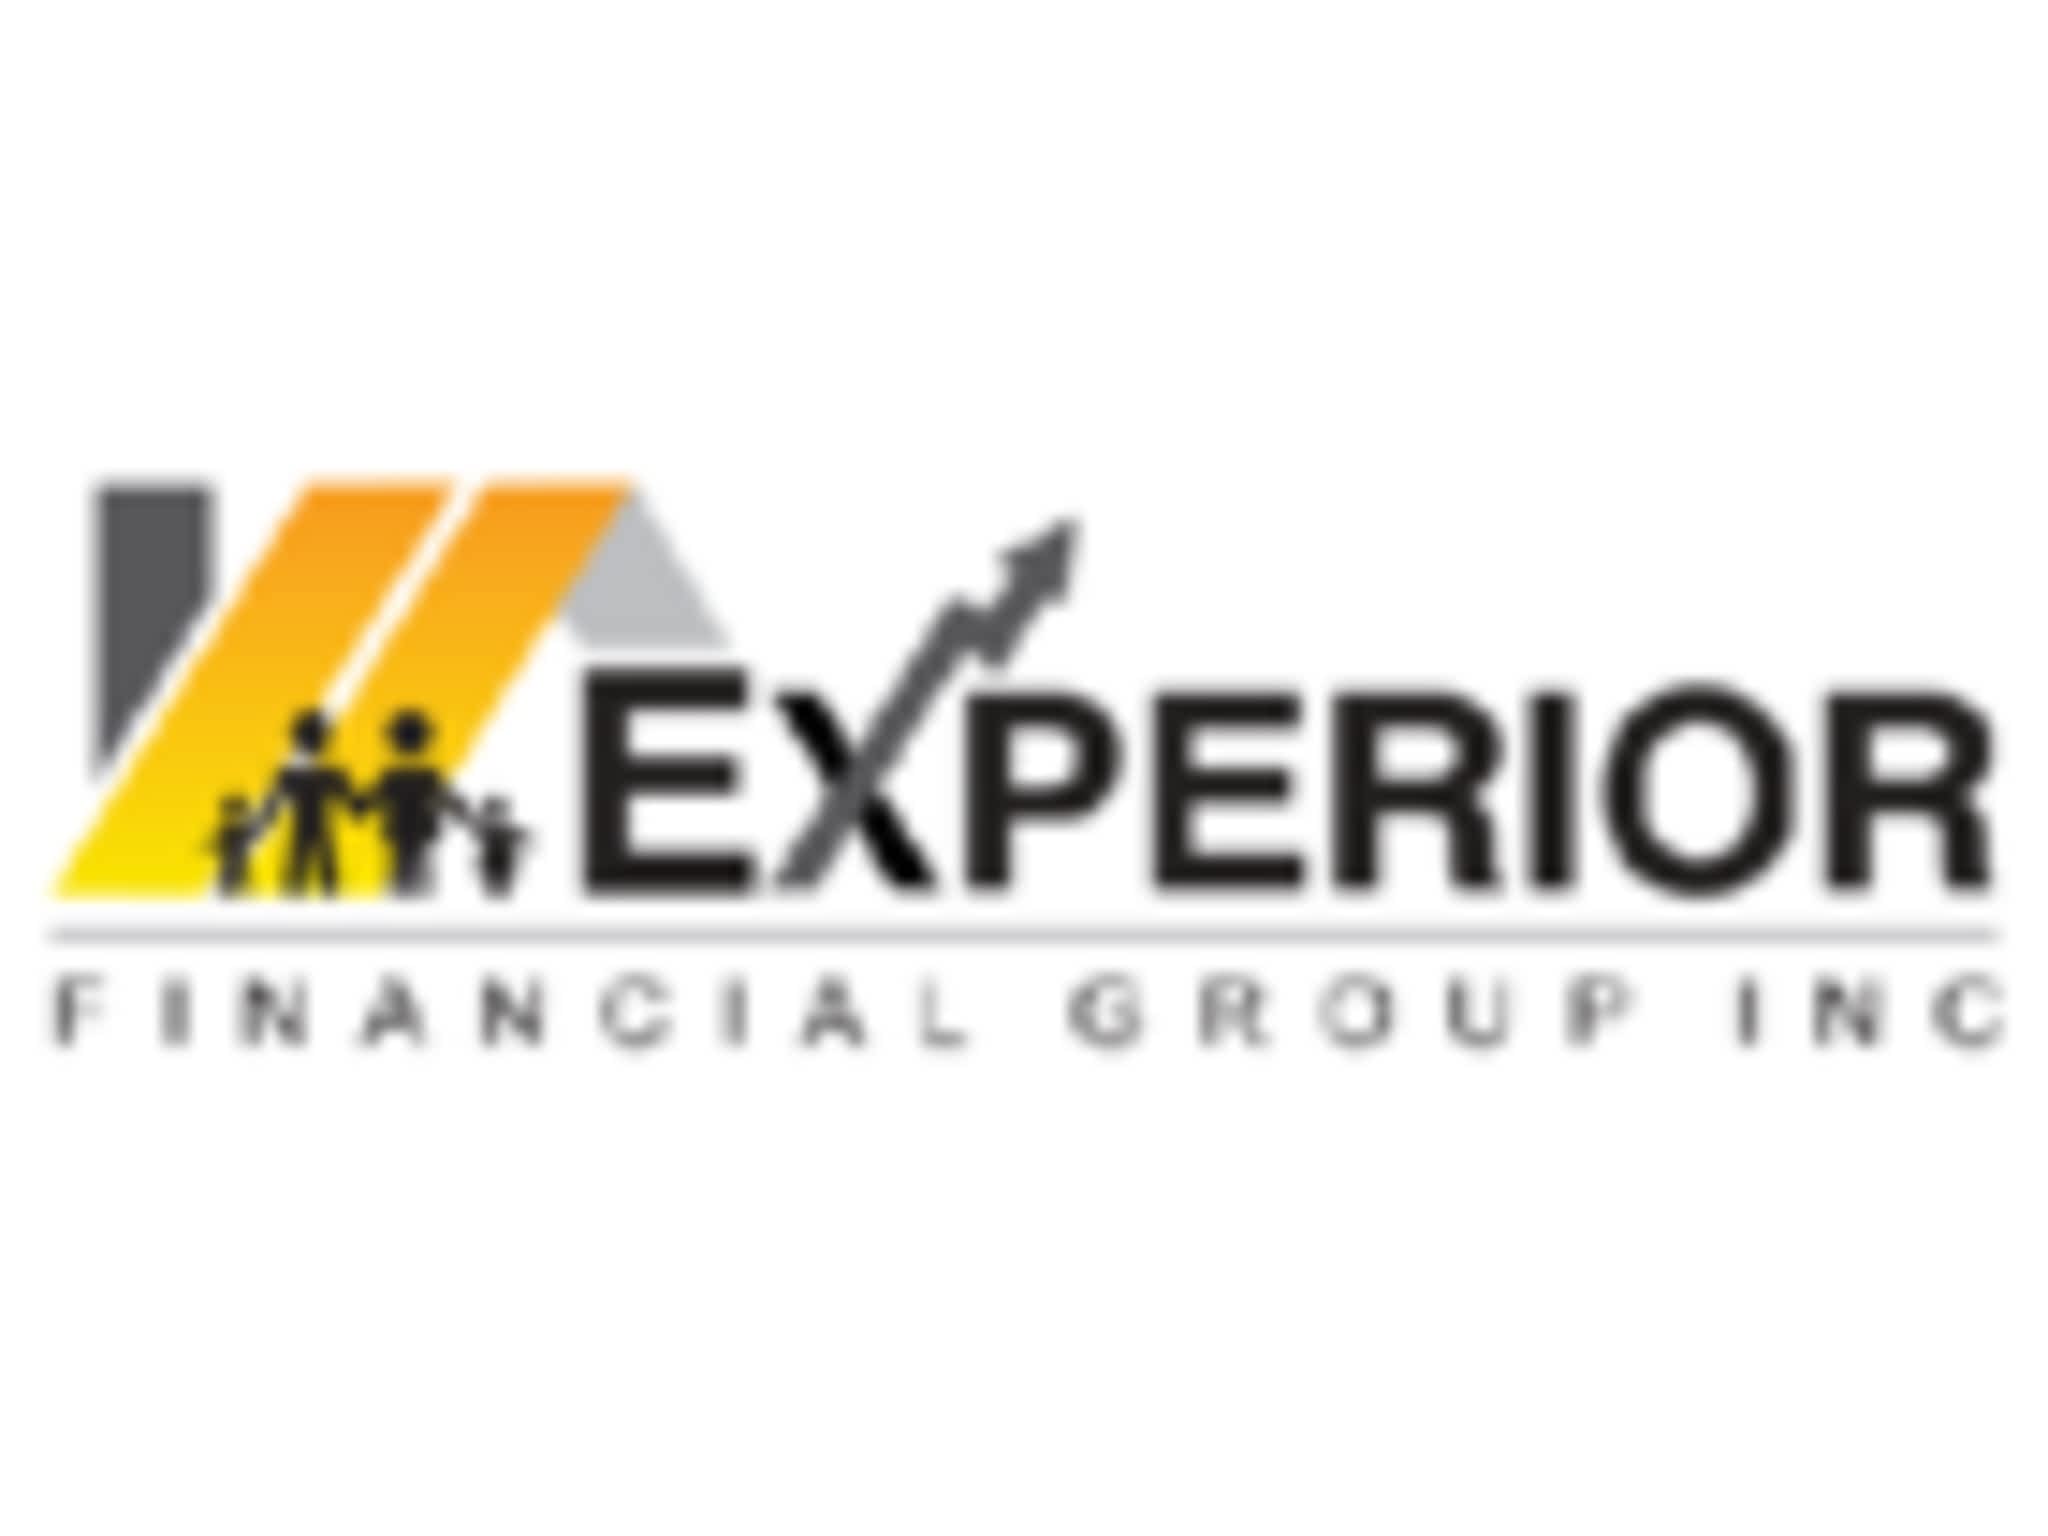 photo Experior Financial Group Inc